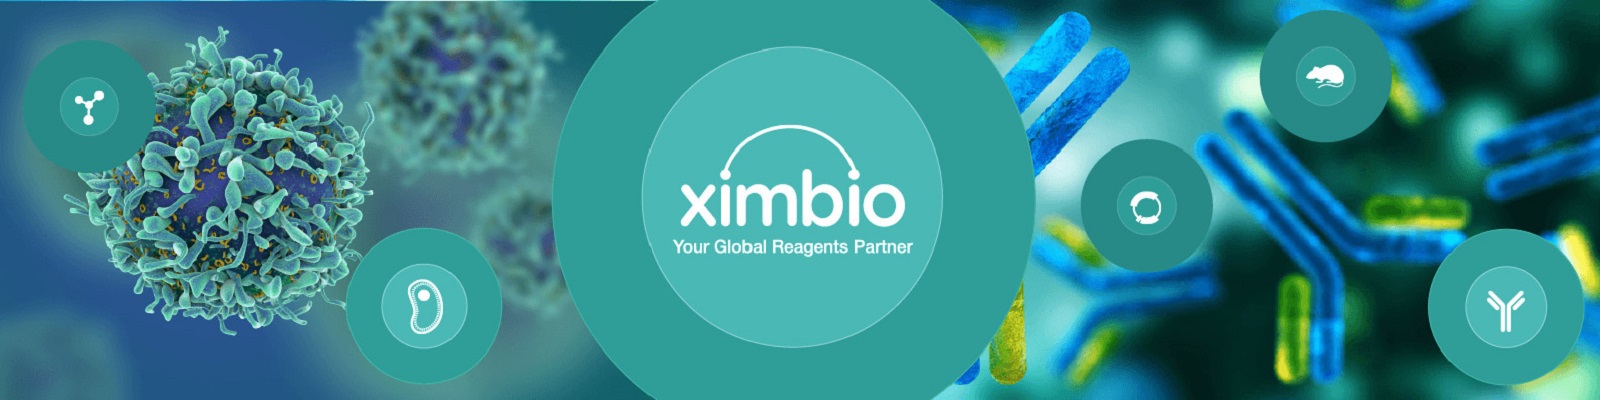 Ximbio Logo with Reagent pictures